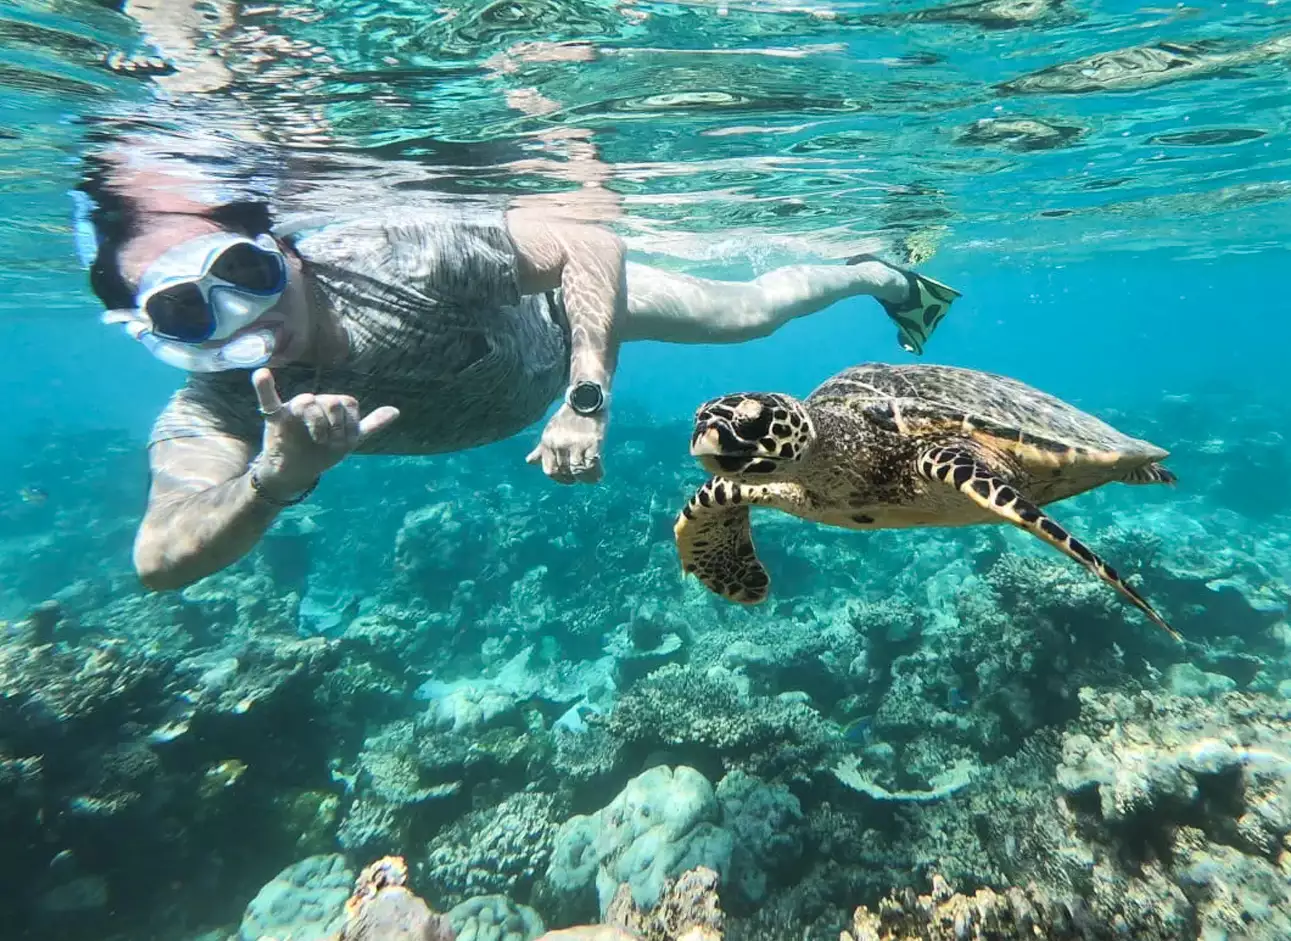 Snorkeling - Explore vibrant marine life underwater